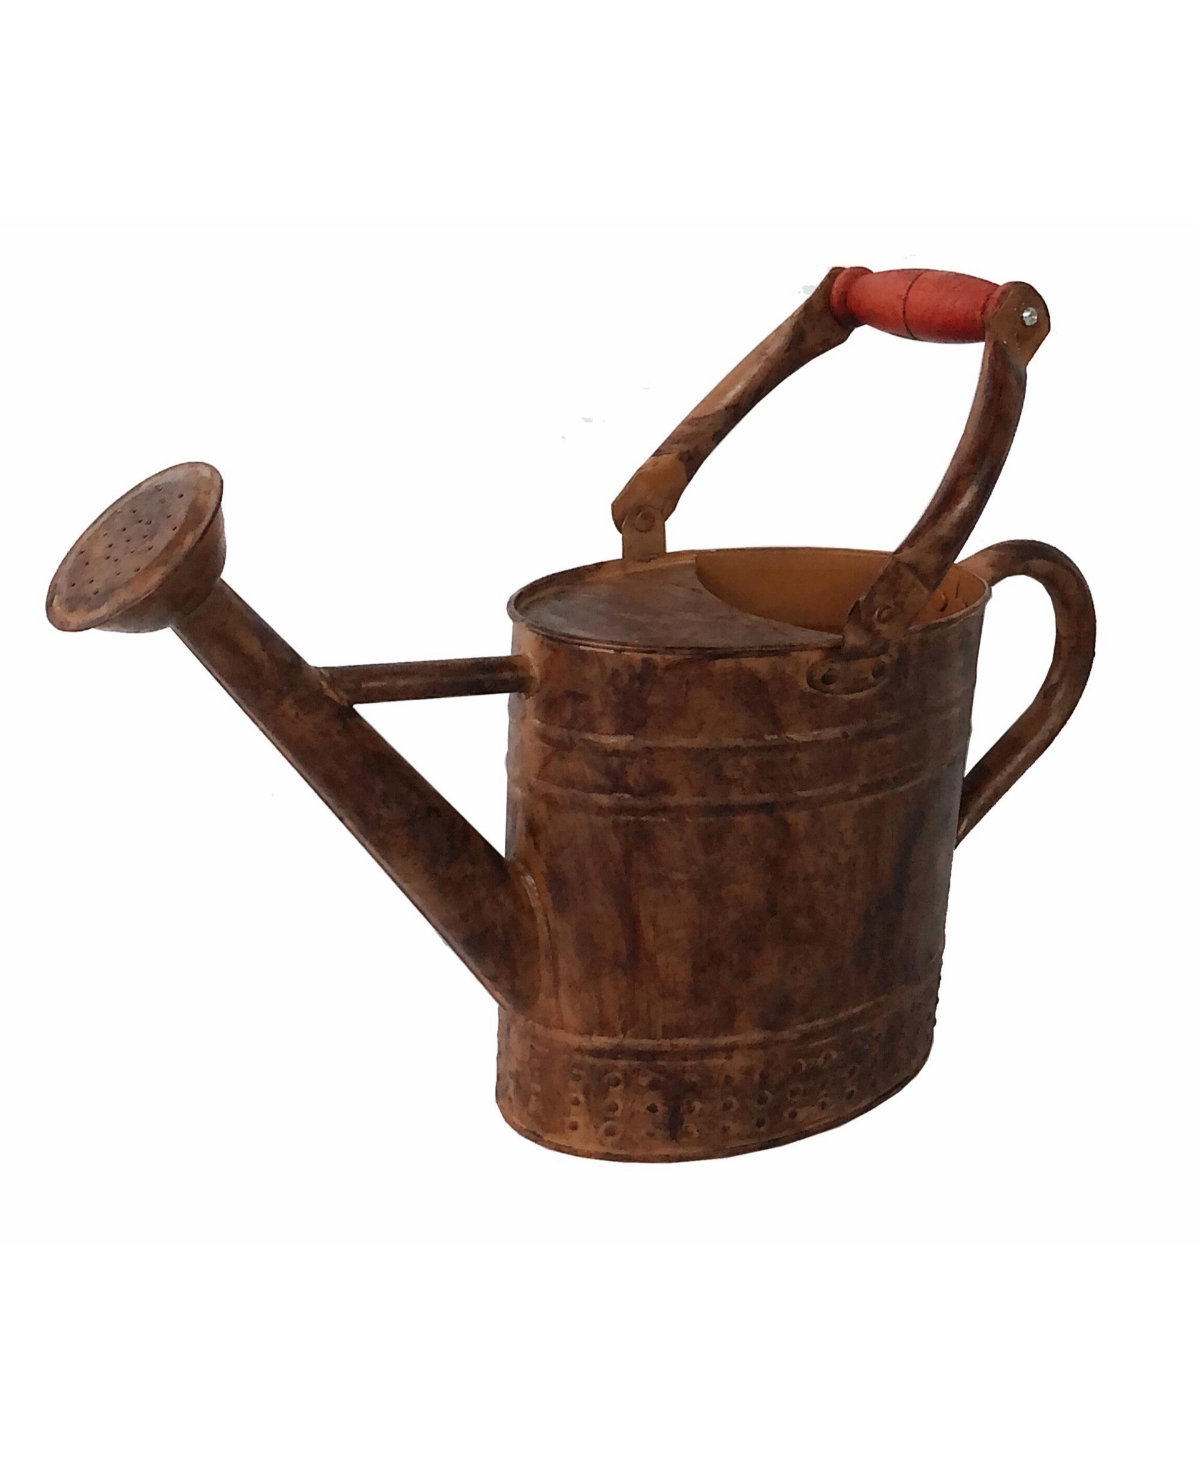 Gardener Select Metal Oval Watering Can, Rusty Wooden Handle, 0.92 Gal - Brown